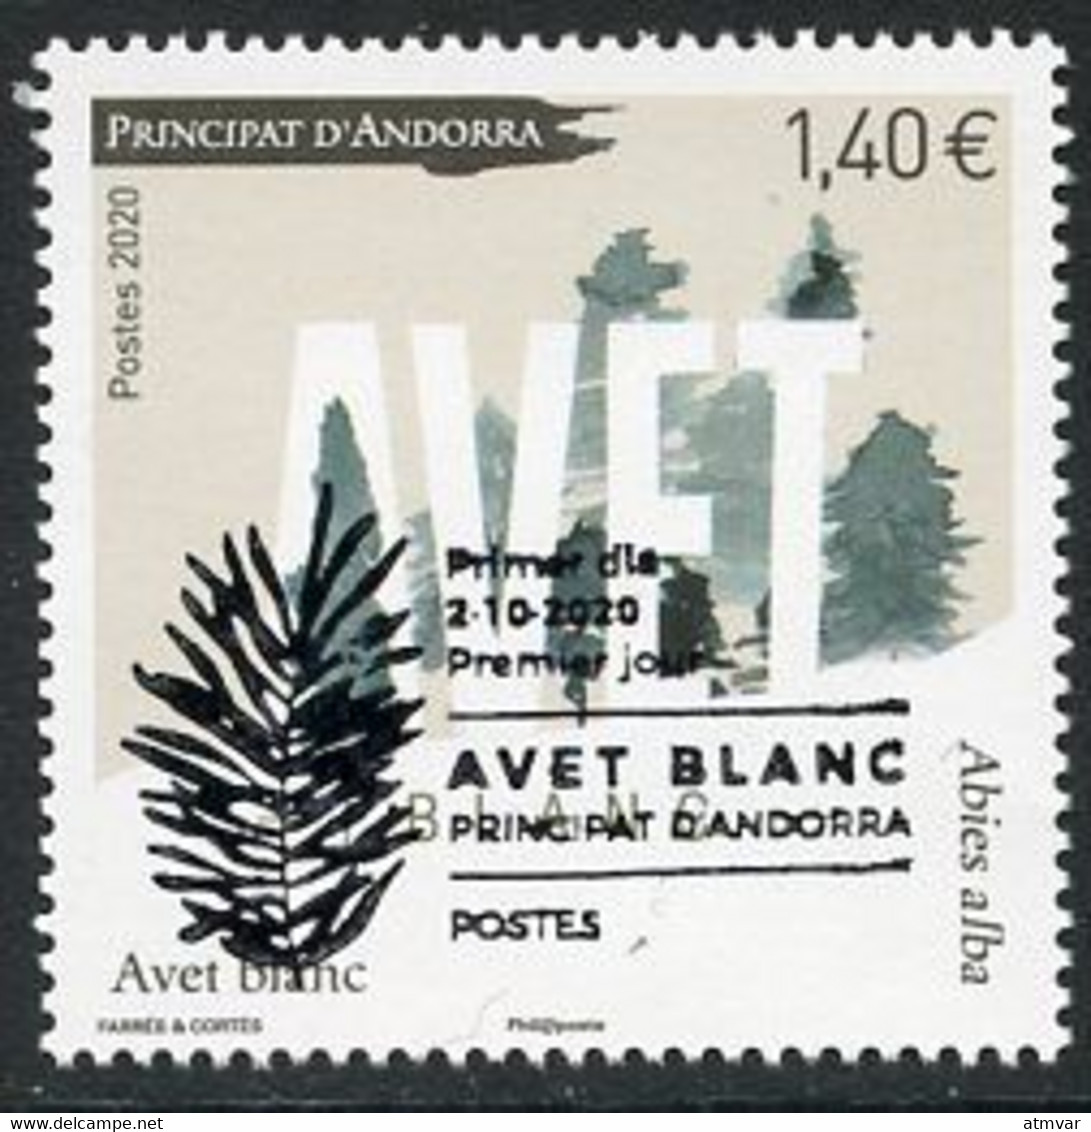 ANDORRA ANDORRE (2020) - Avet Blanc, Abies Alba, Sapin Blanc - Premier Jour, First Day Postmark, Matasello Primer Día - Gebruikt